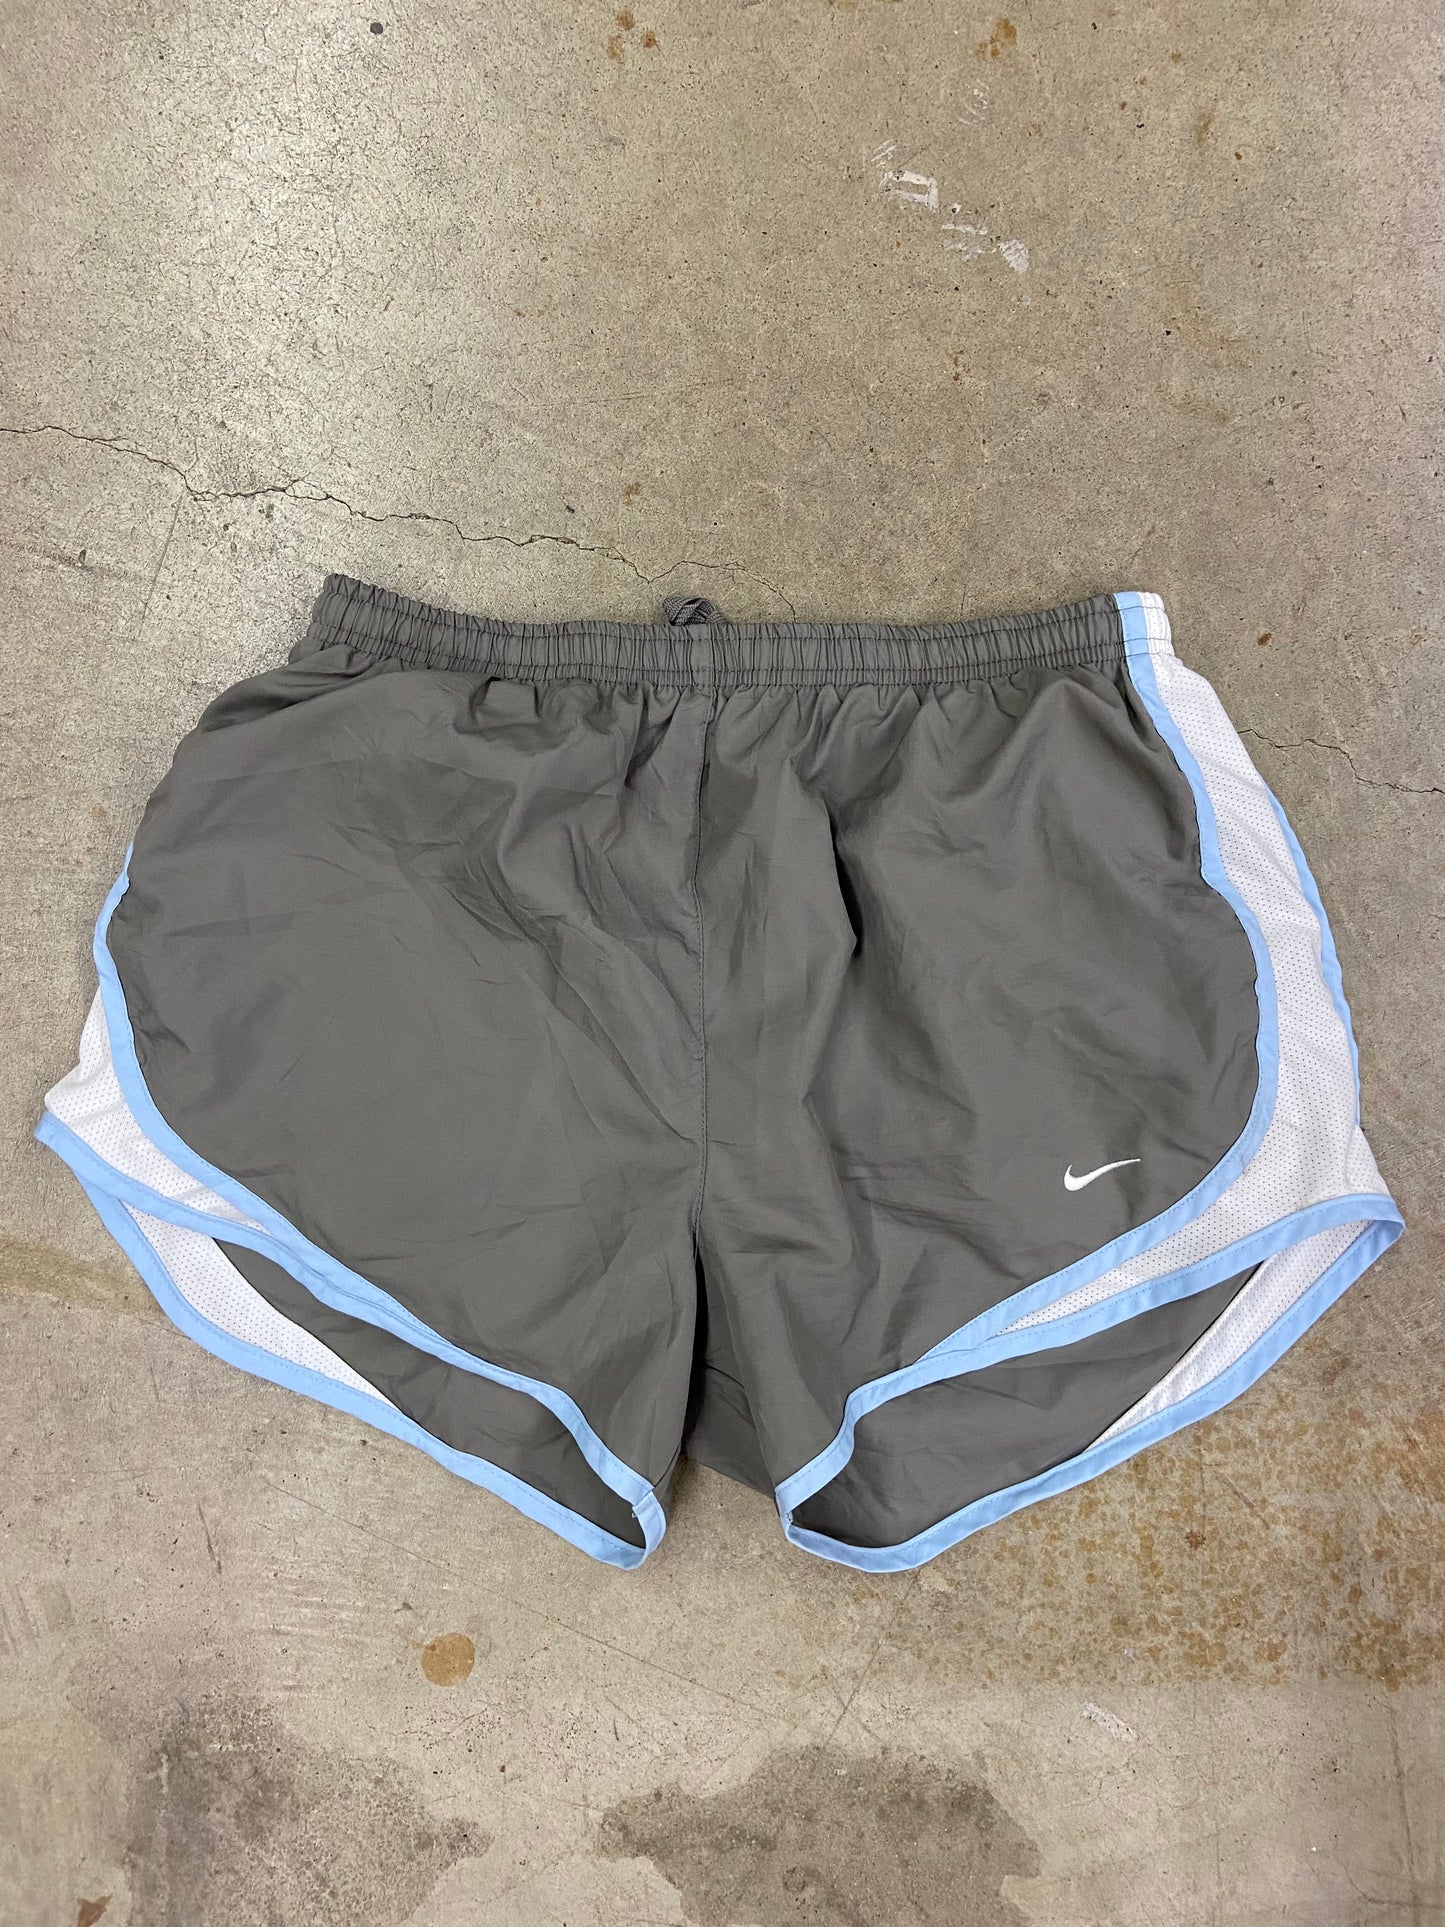 Wmns Nike Fit-Dry Grey/Blue Running Shorts Sz M